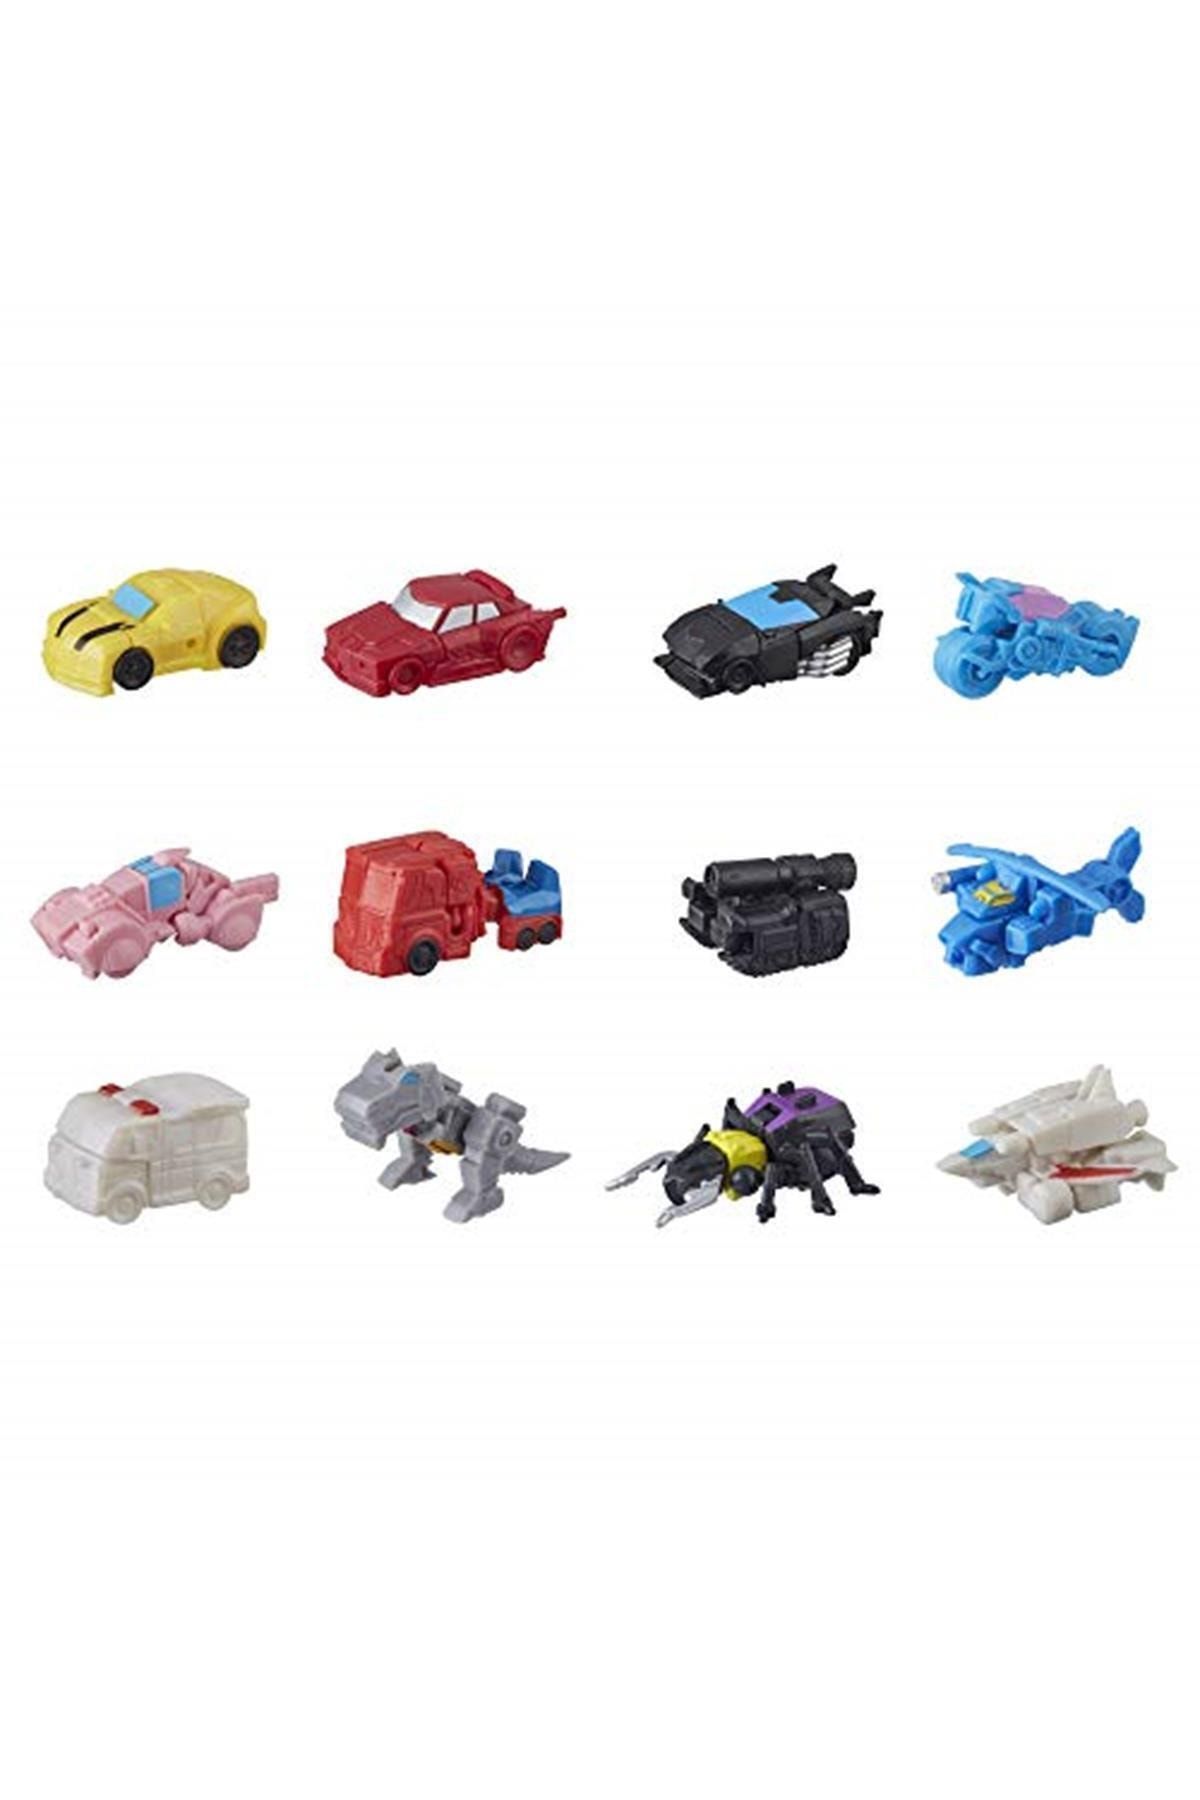 transformers Marka: Cyberverse Turbo Changers Sürpriz Paket Kategori: Karakter Figür Oyuncaklar